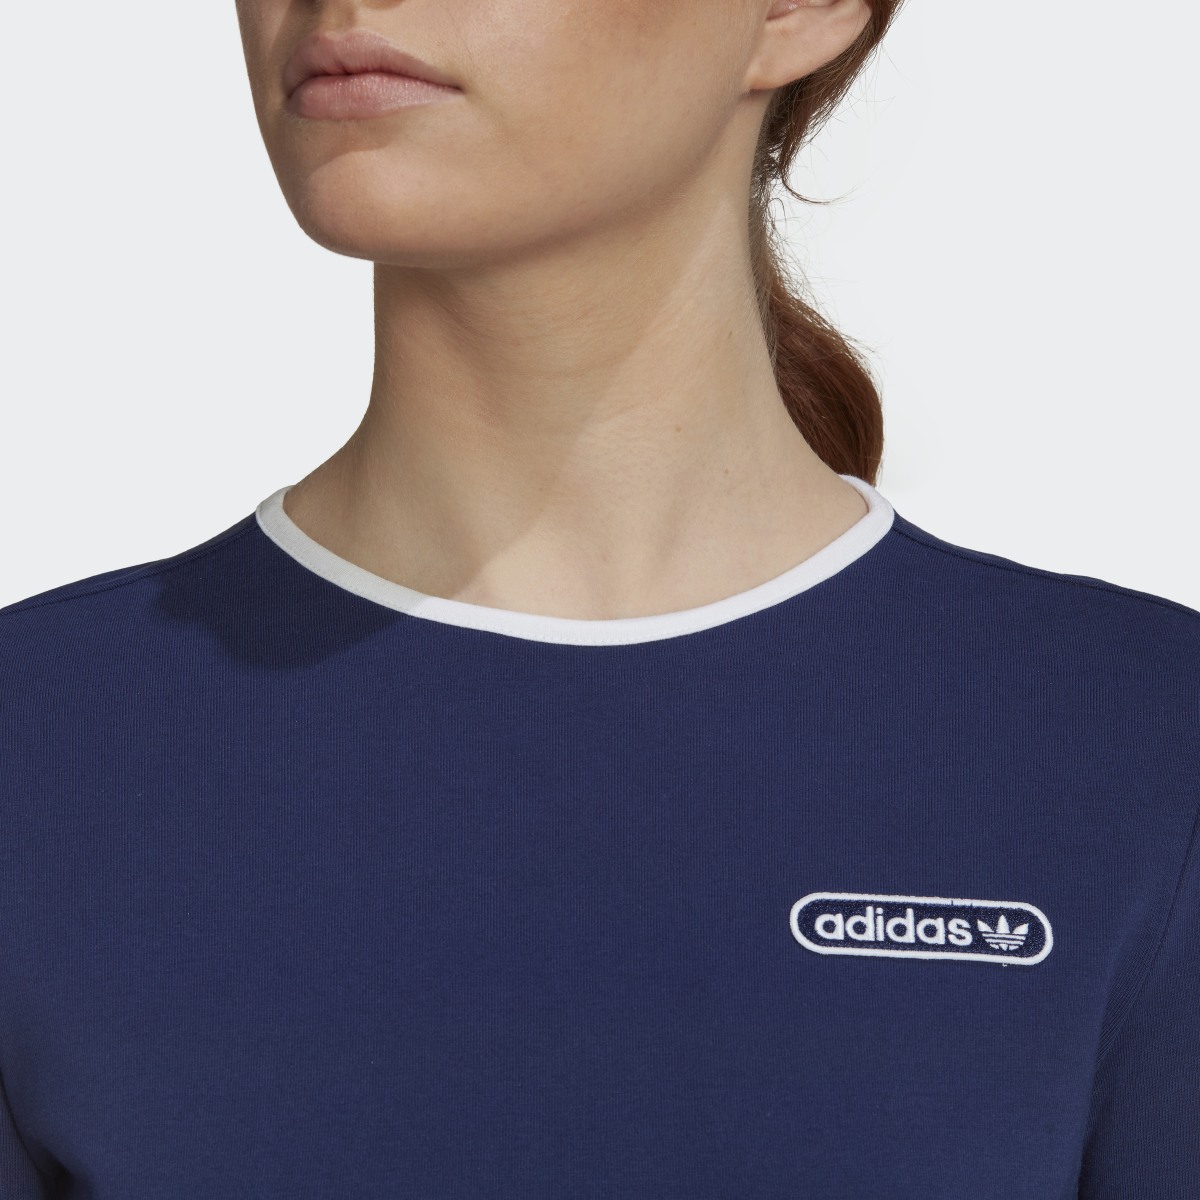 Adidas T-shirt crop avec bordure. 7